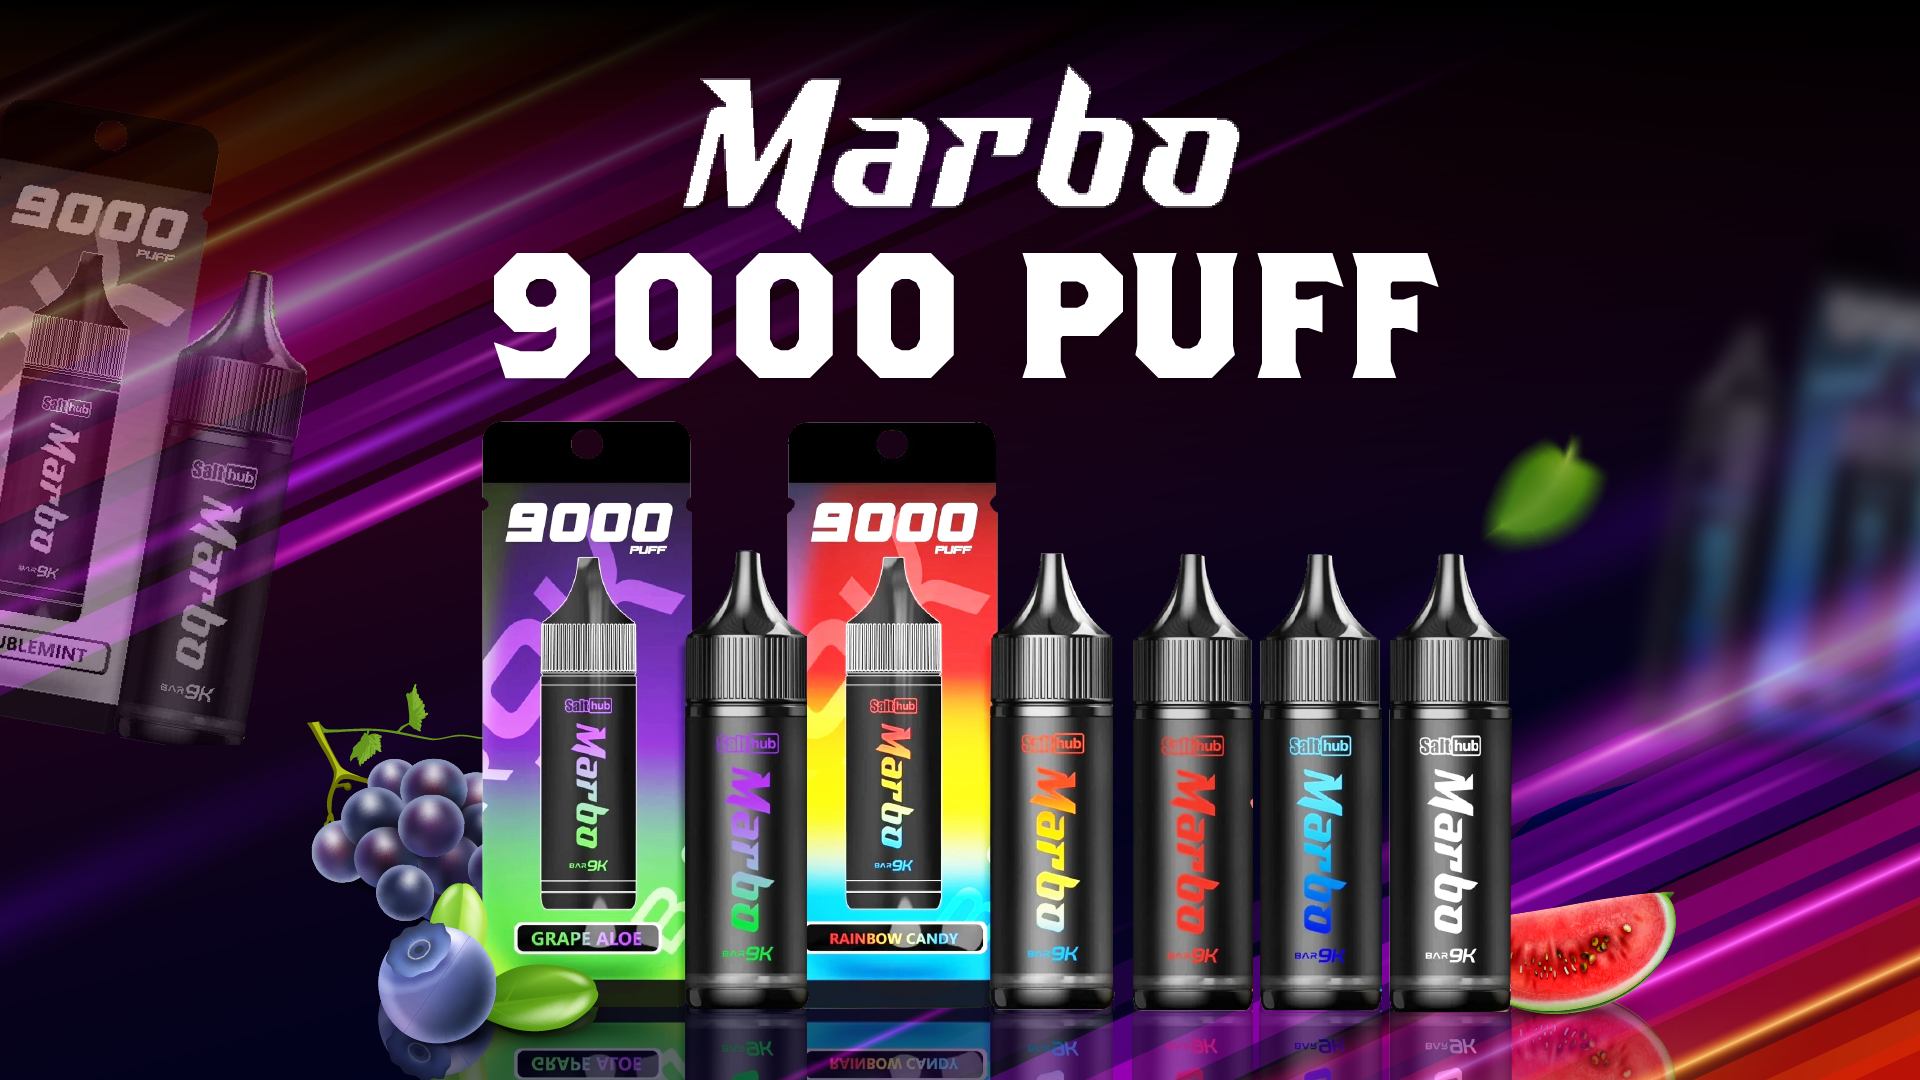 Marbo 9000 Puffs